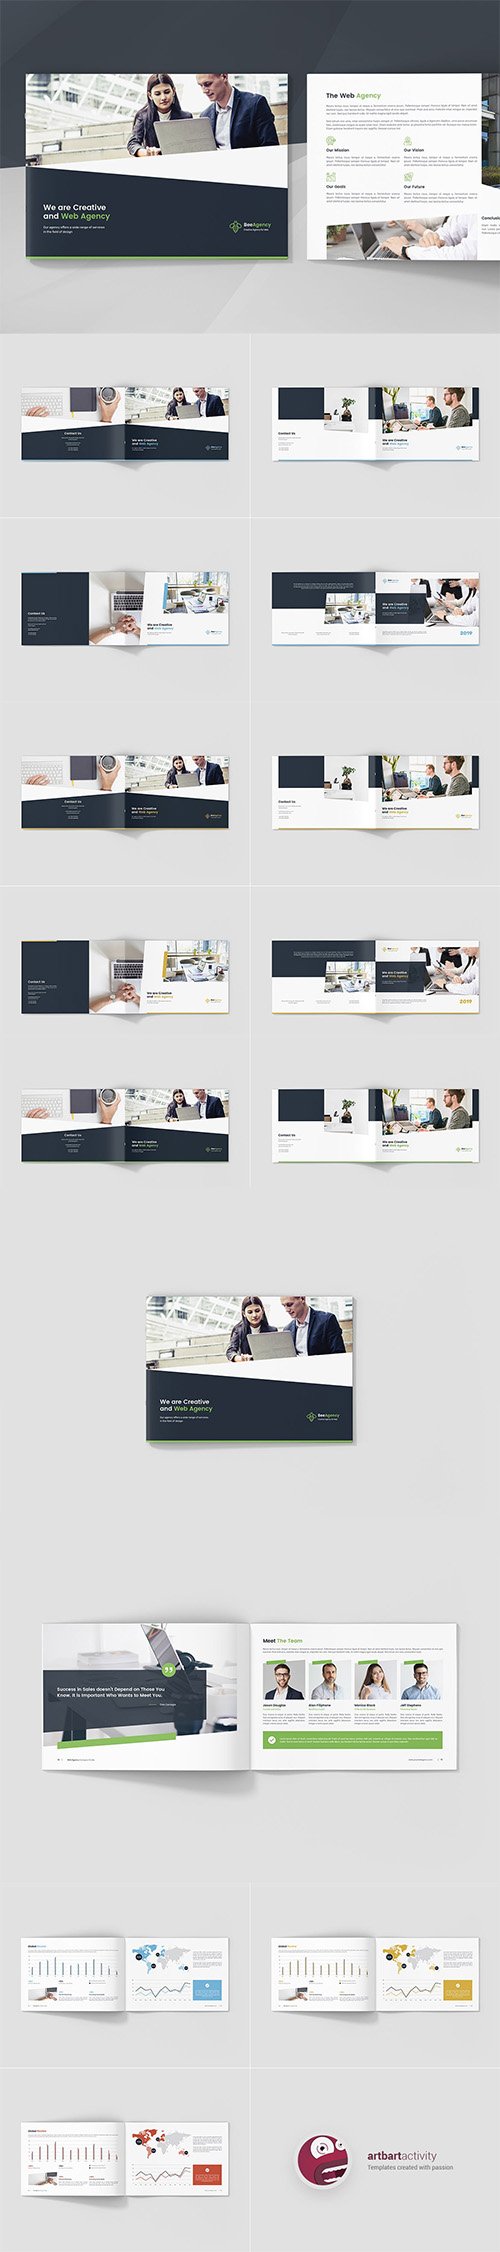 Web Agency - Company Profile Landscape